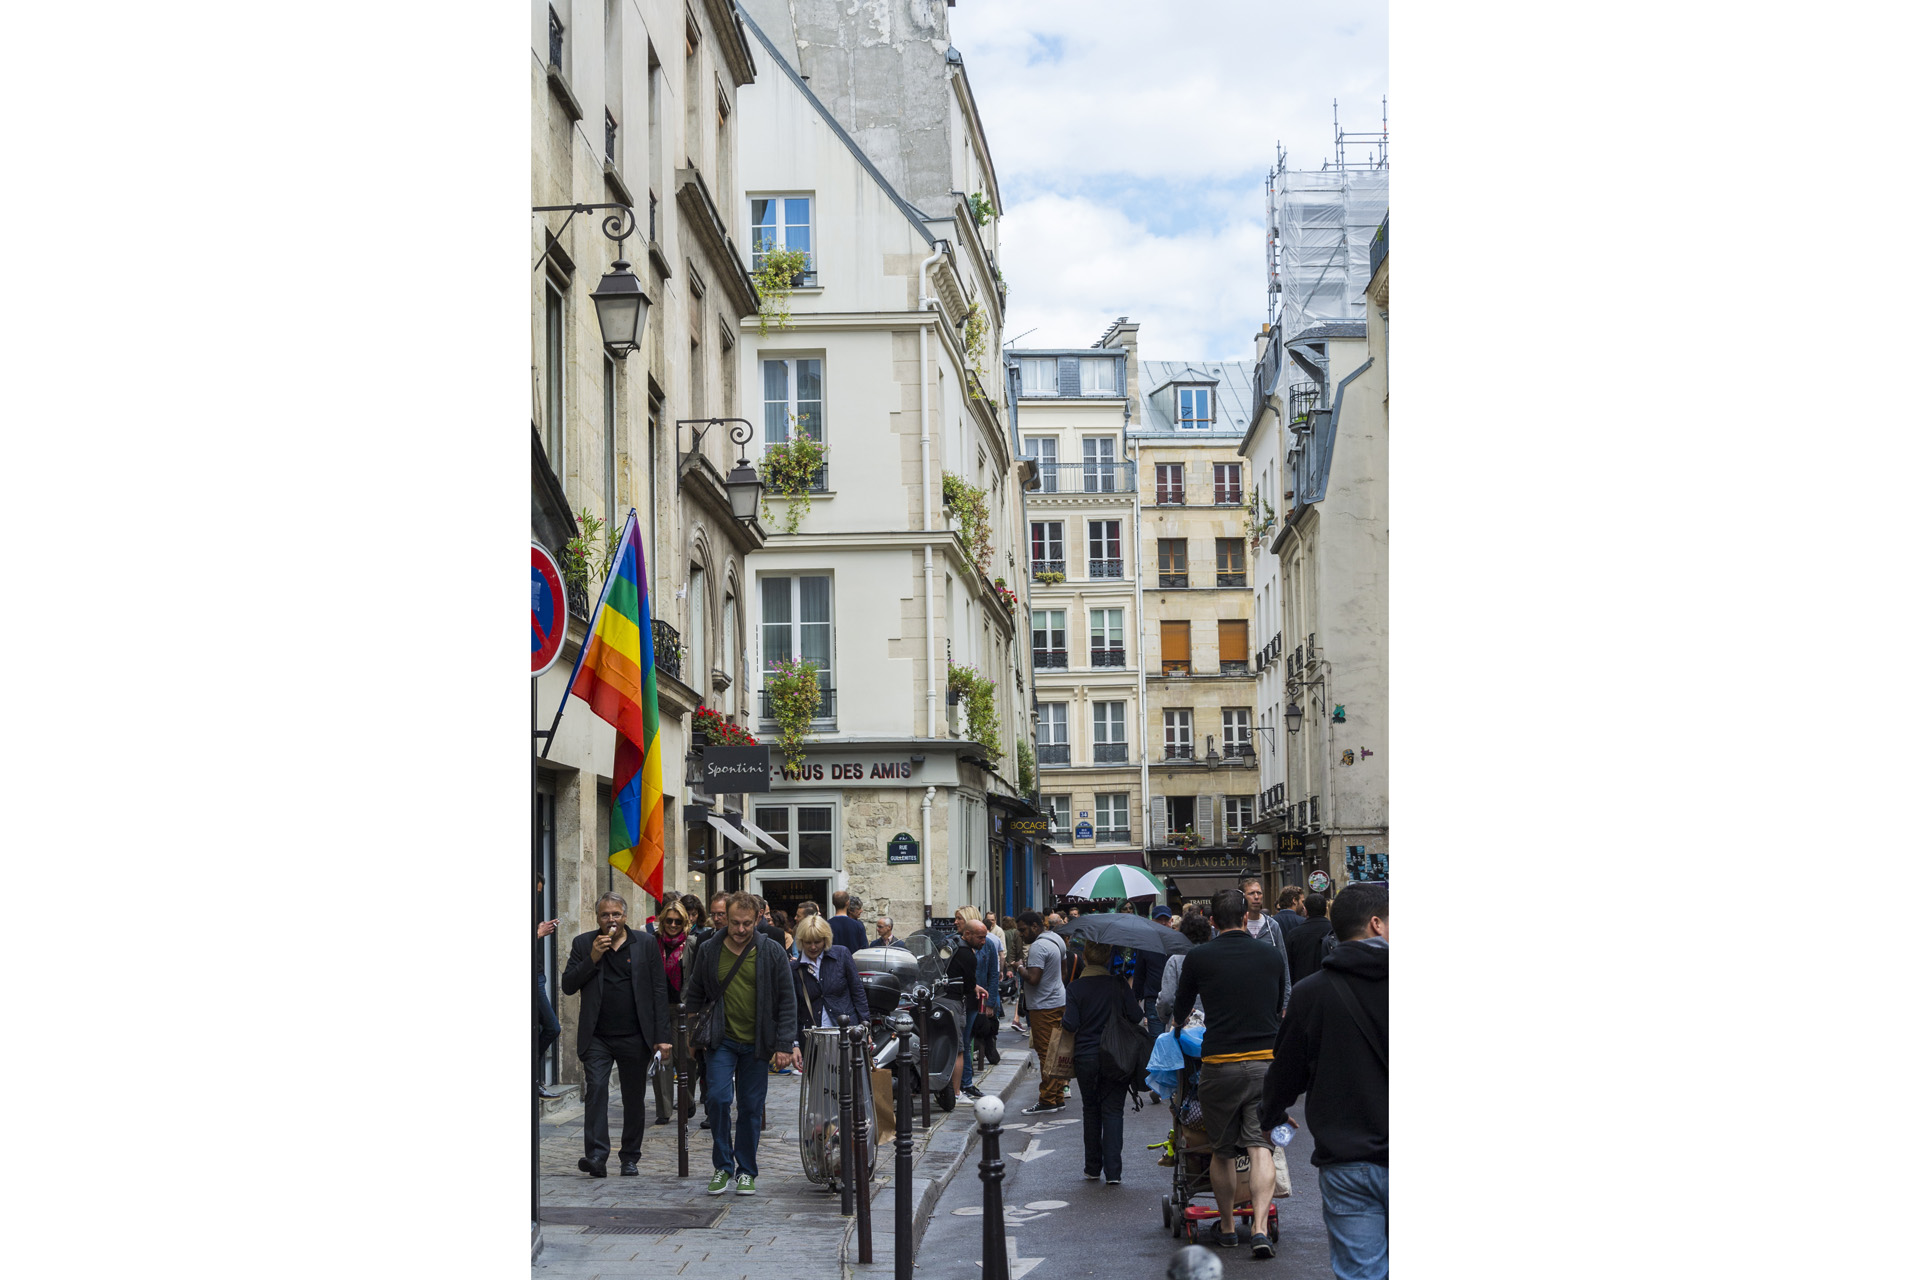 Daytime street scene in Marais district of Paris.